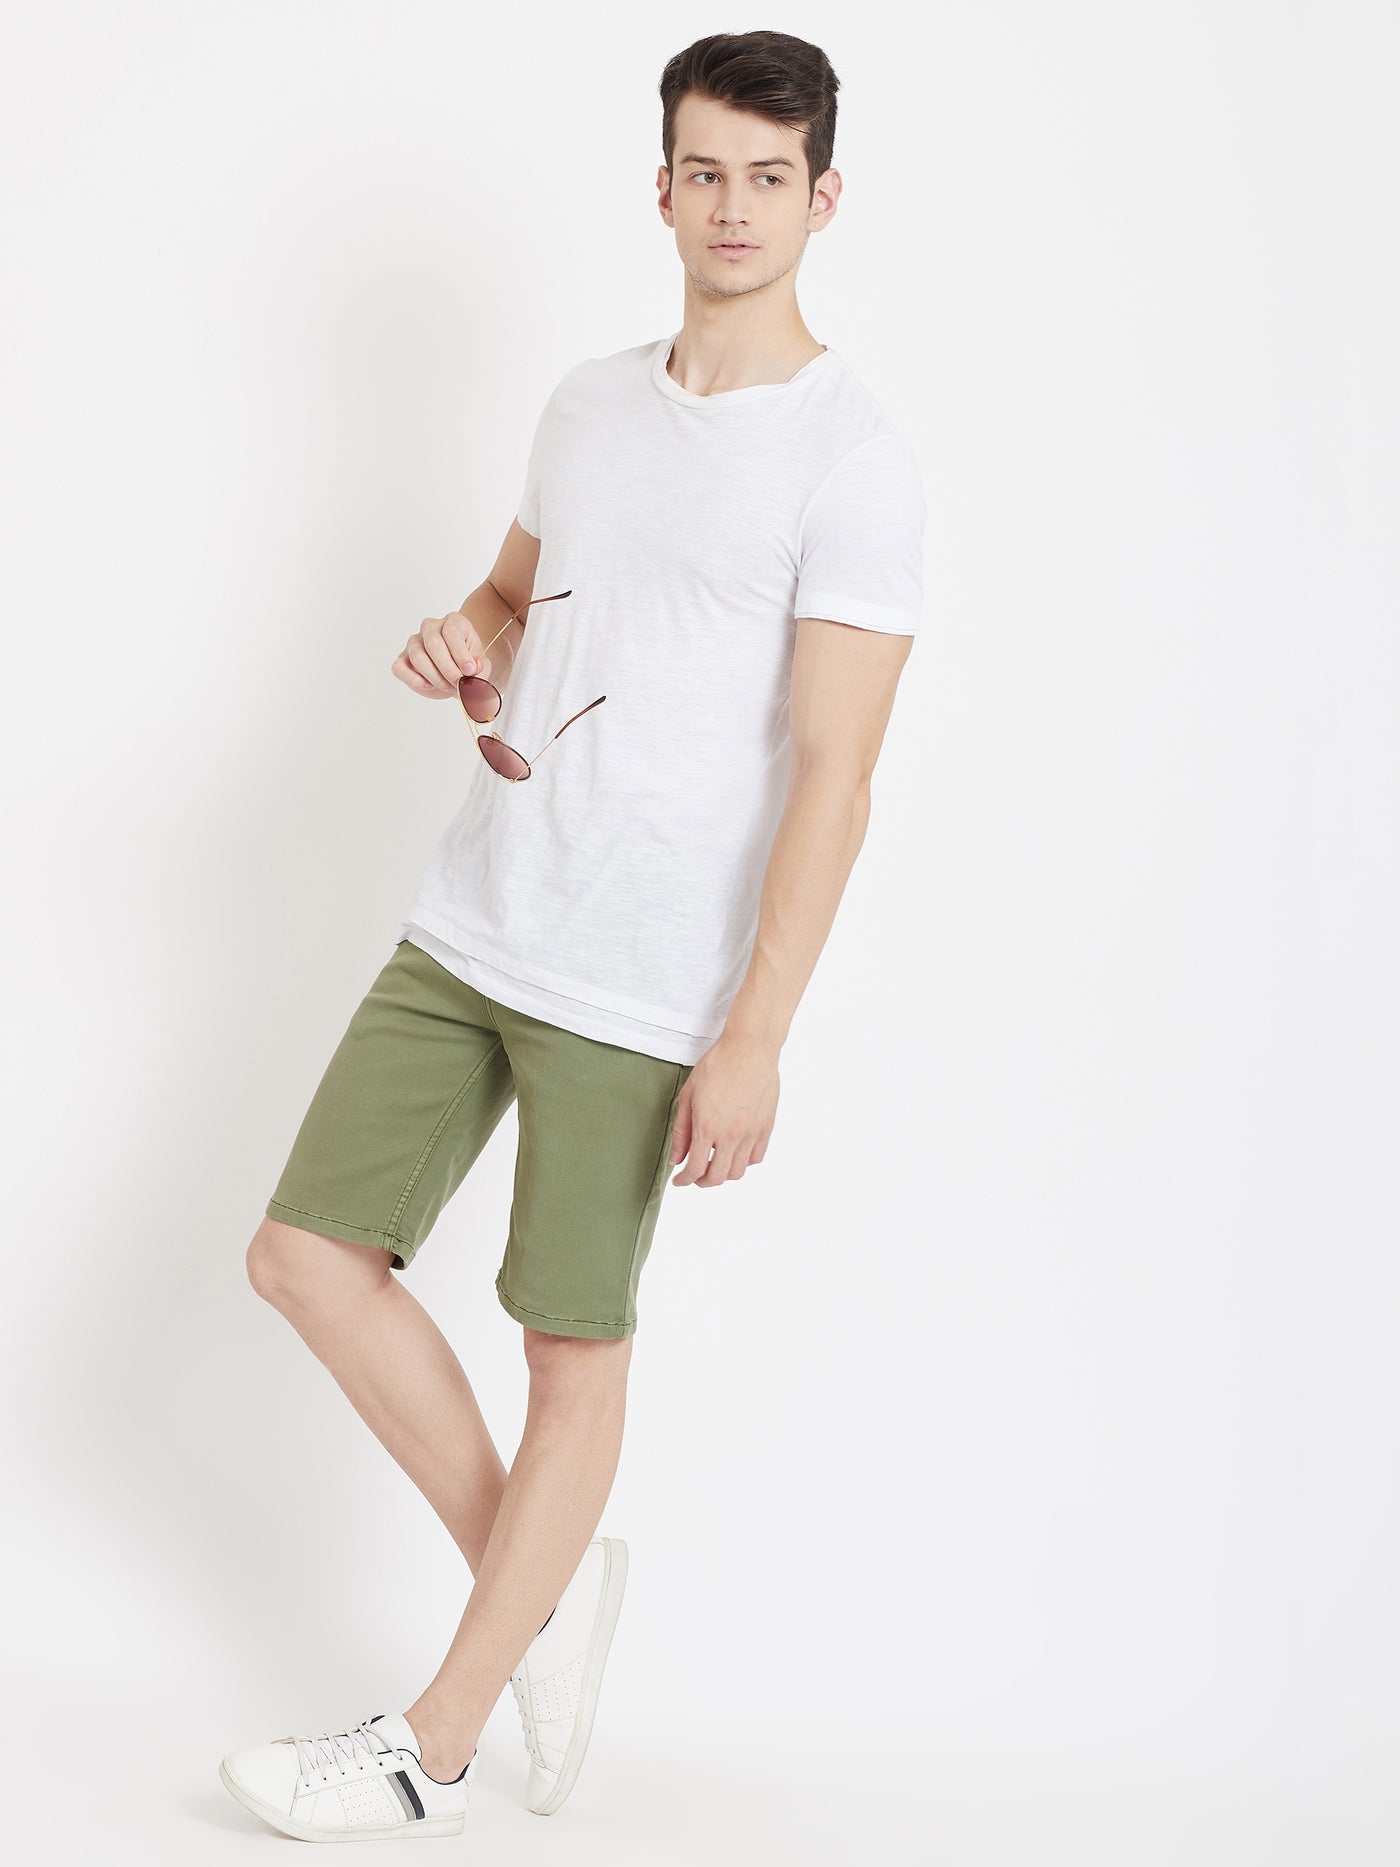 Green Slim Fit Shorts - Men Shorts